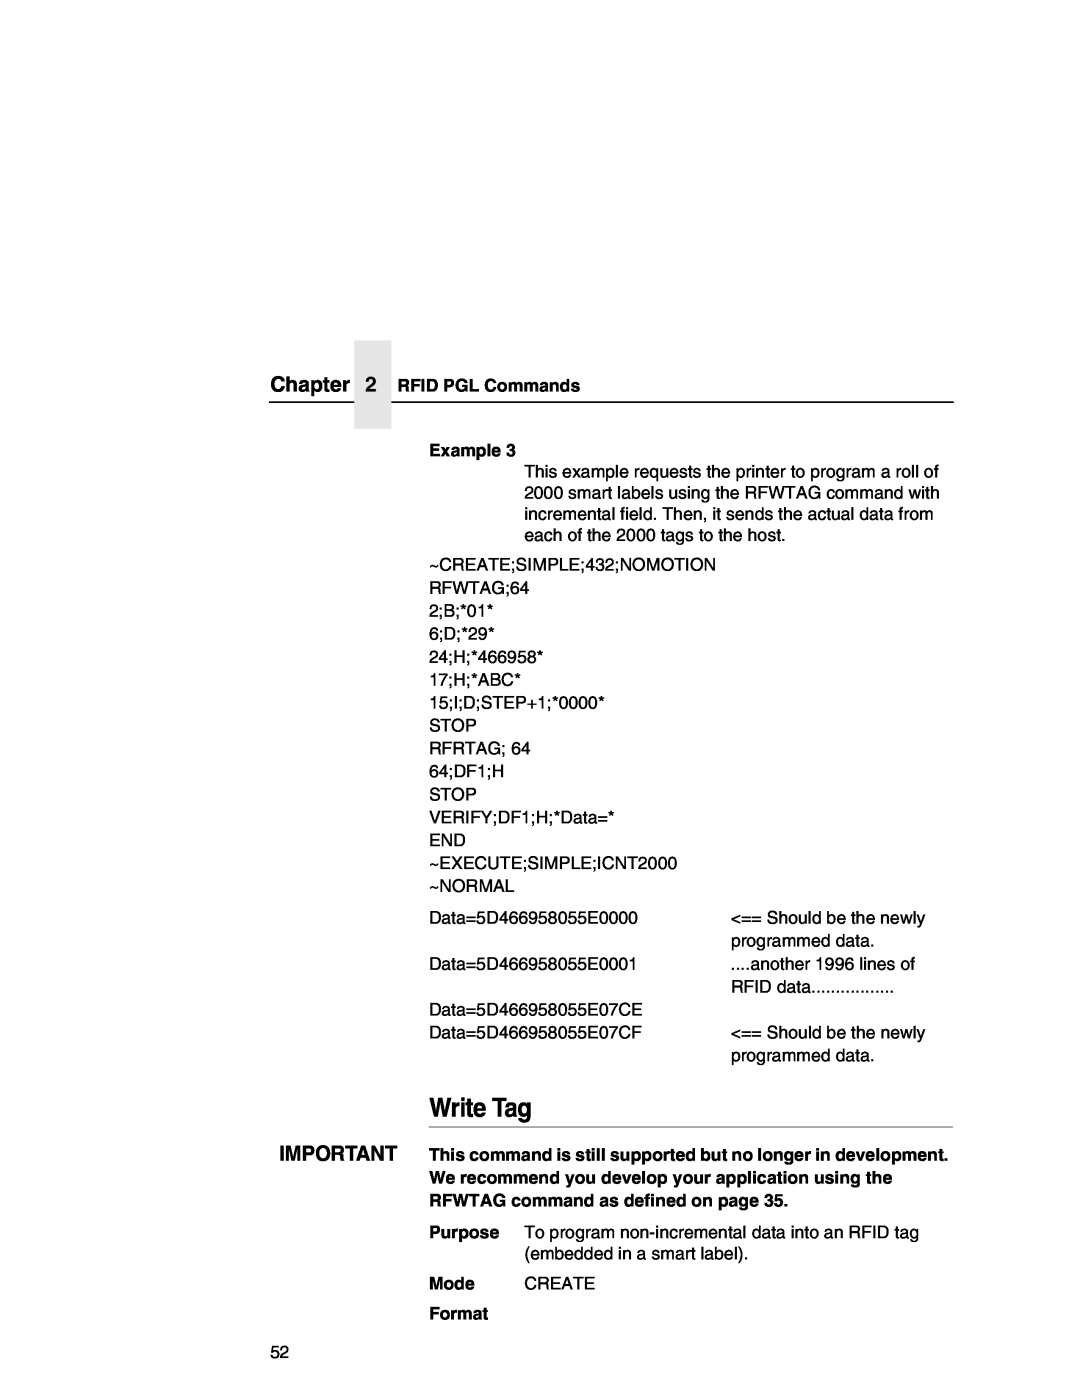 Printronix SL5000r MP manual Write Tag, Format, RFID PGL Commands, Example 